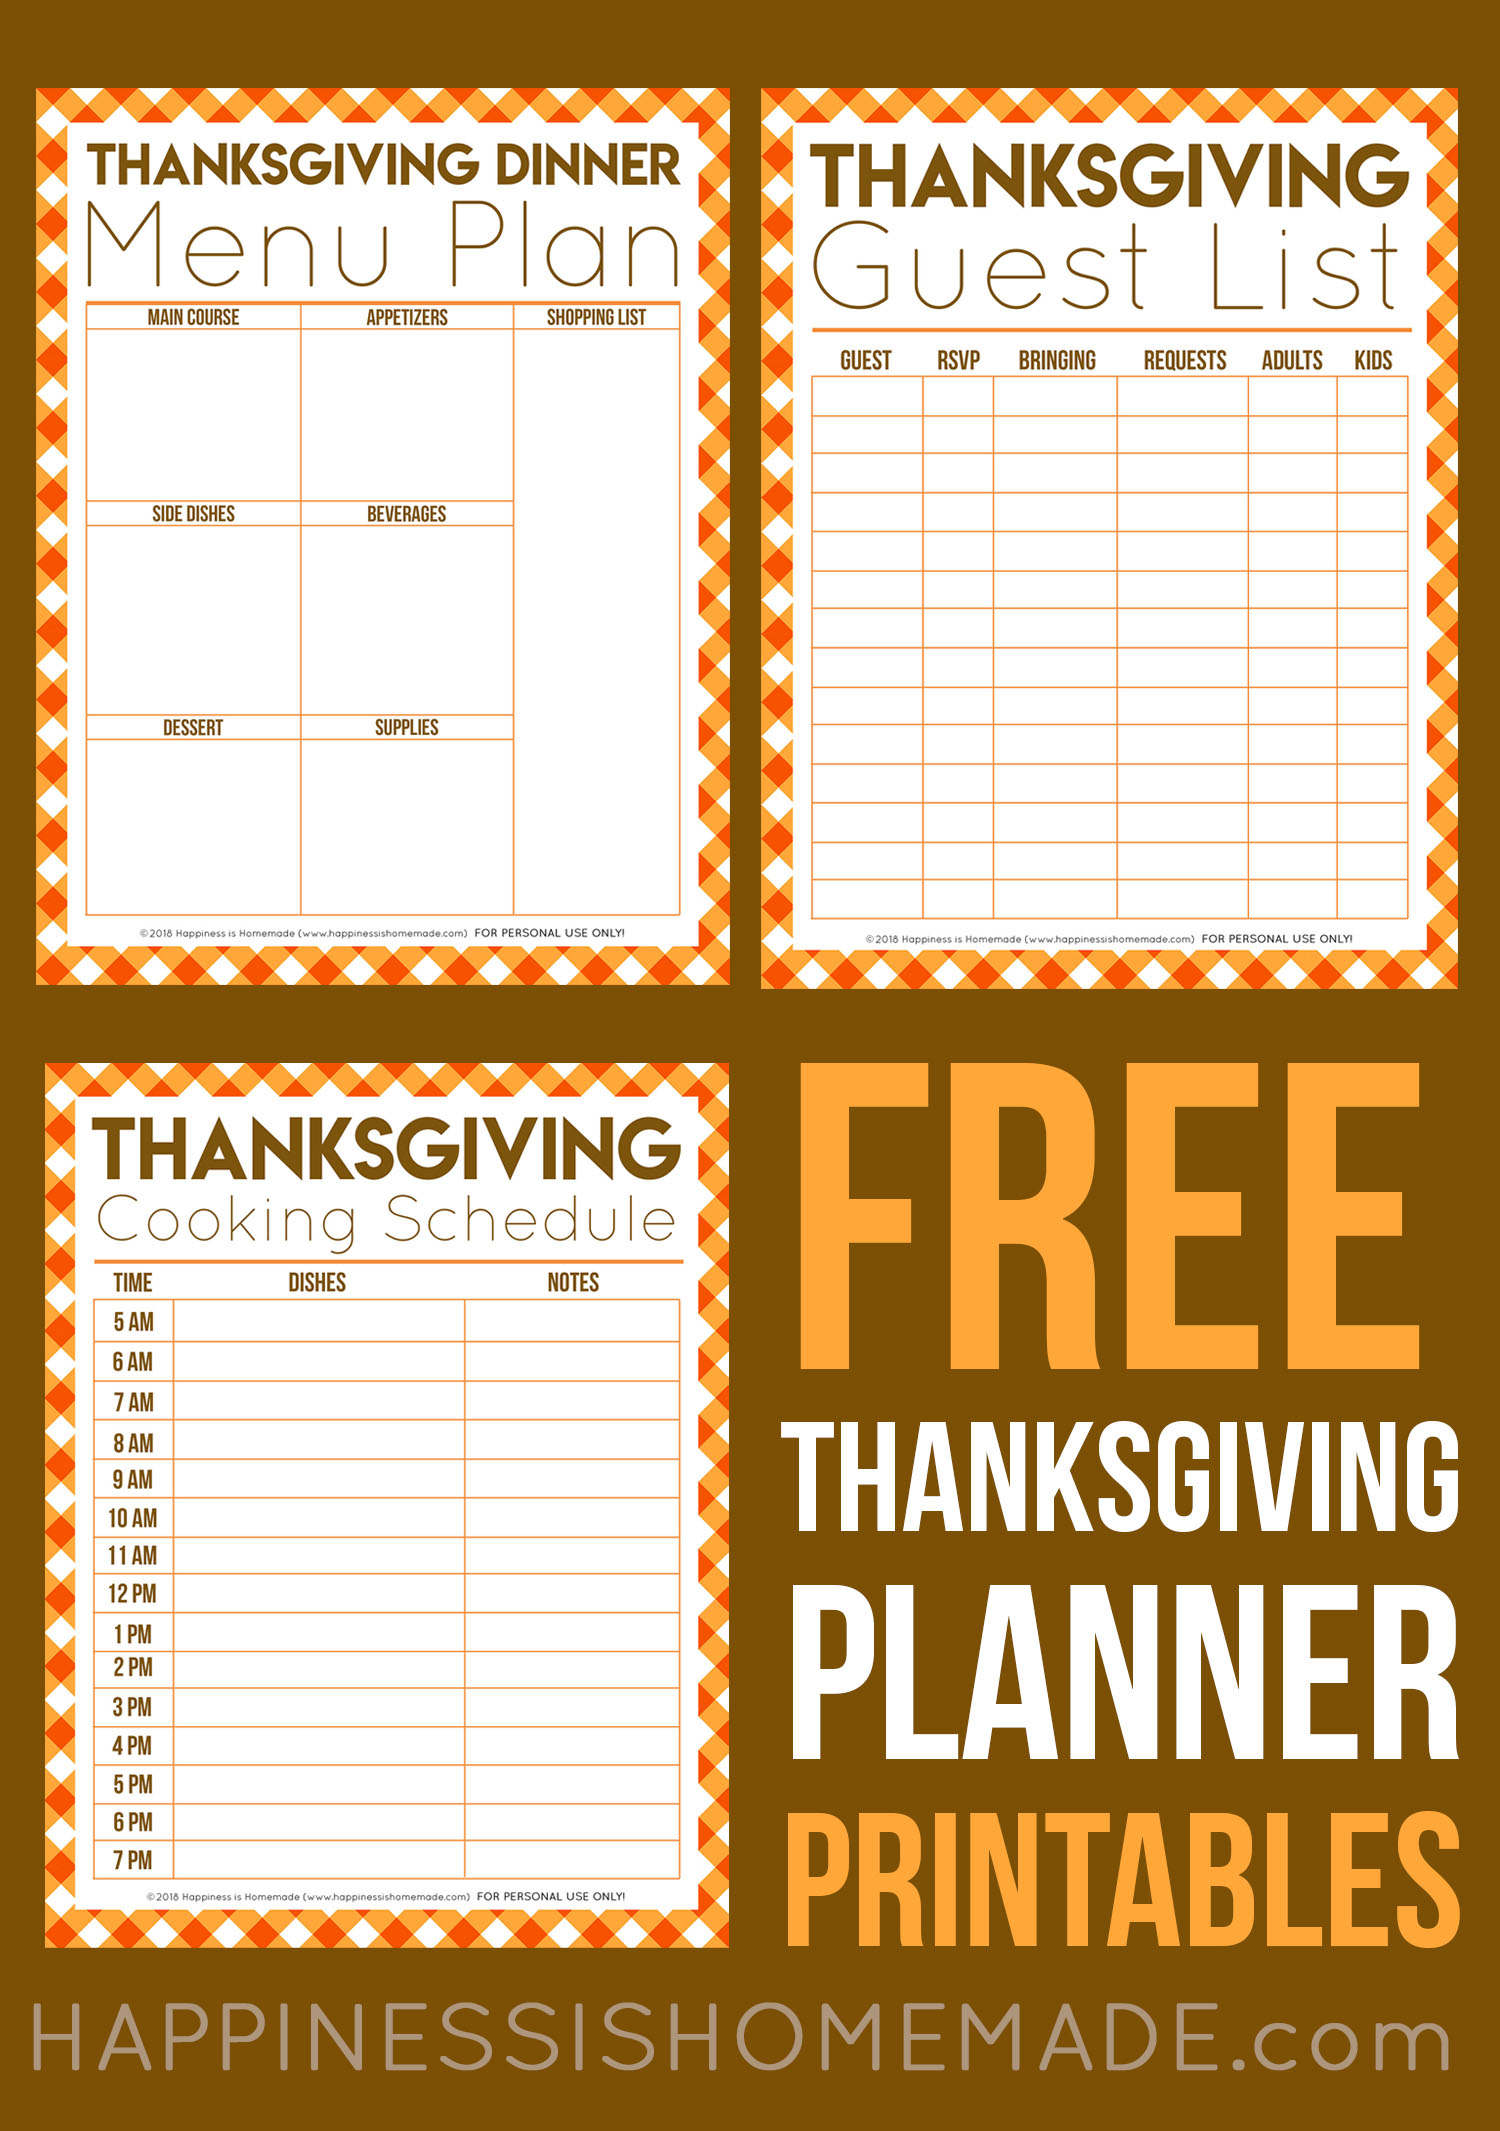 Free Thanksgiving Printables Menu Planner, Guest List, & More